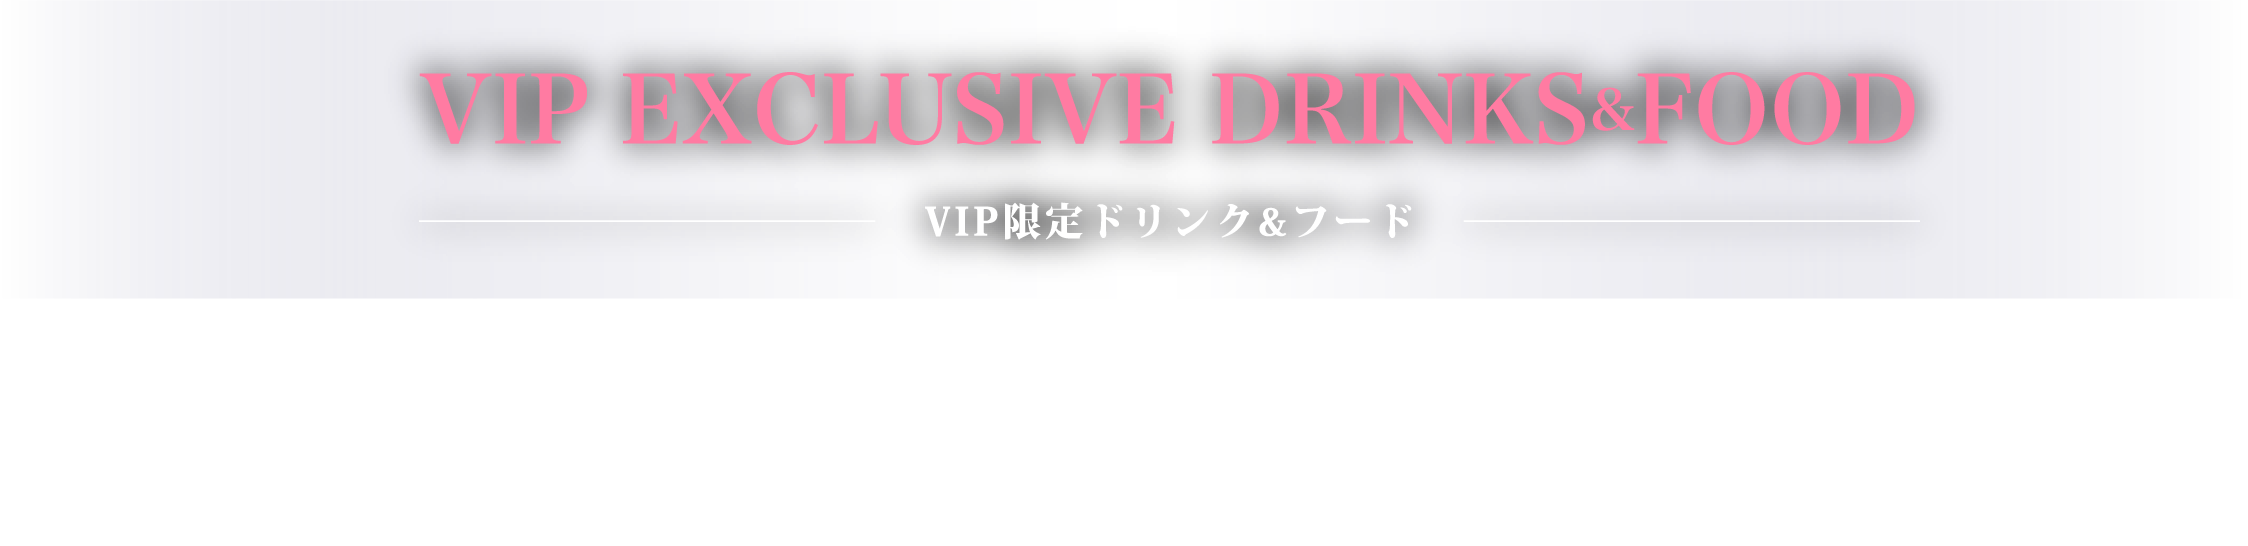 VIP EXCLUSIVE DRINKS&FOOD
VIP限定ドリンク&フード
VIP限定オフィシャル
ドリンク&フードブース登場!